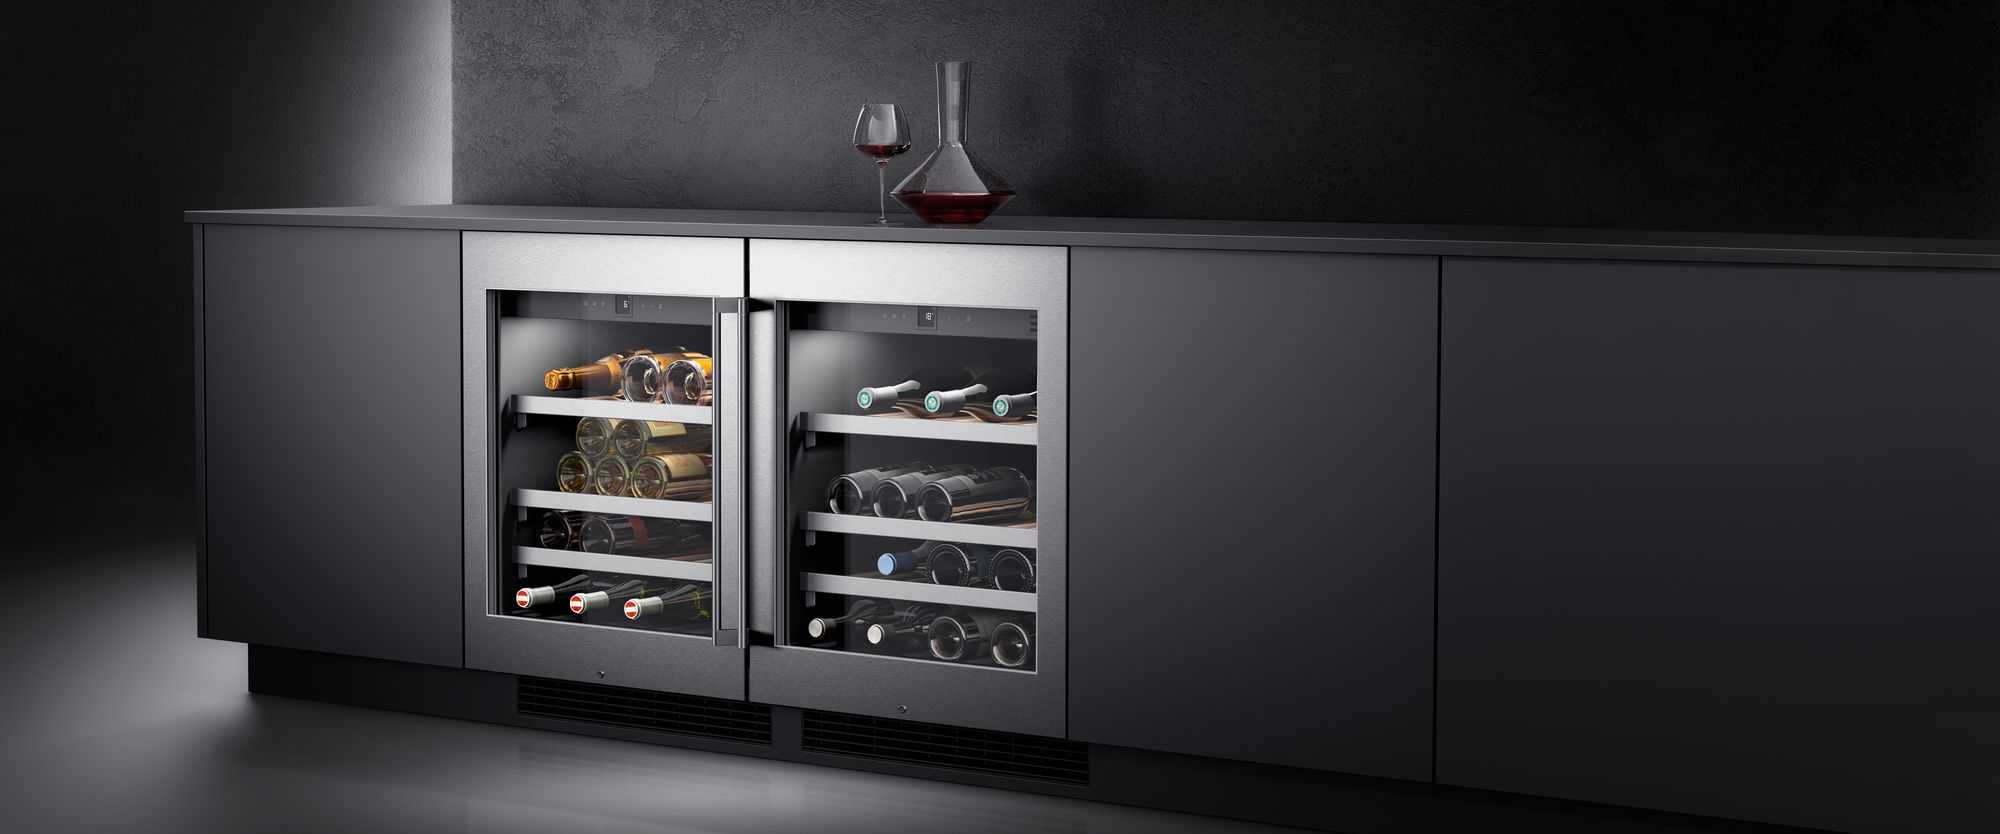 Gaggenau Wine Cabinets 200 series by FCI London